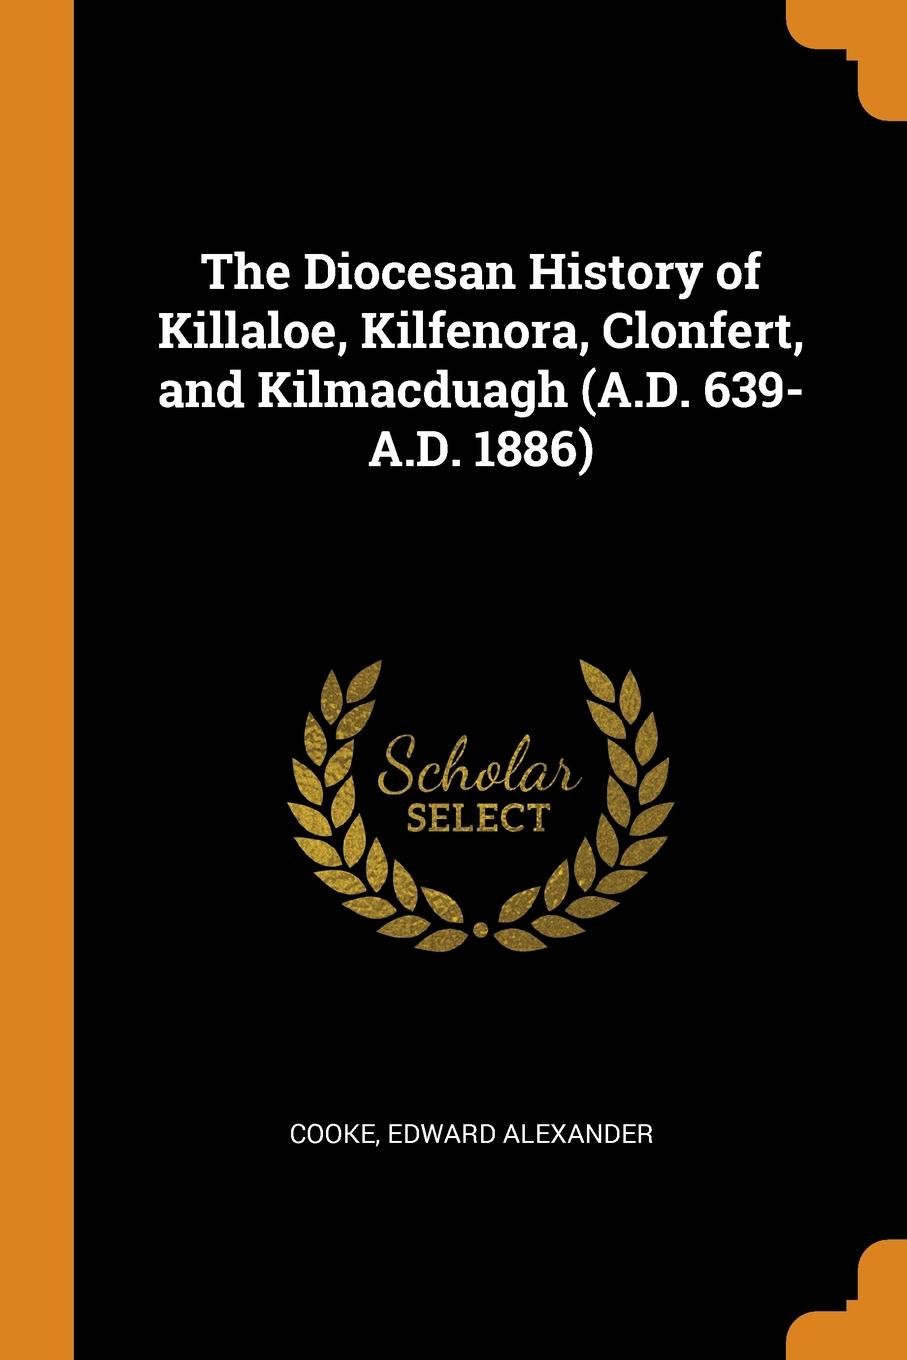 The Diocesan History of Killaloe, Kilfenora, Clonfert, and Kilmacduagh (A.D. 639-A.D. 1886)